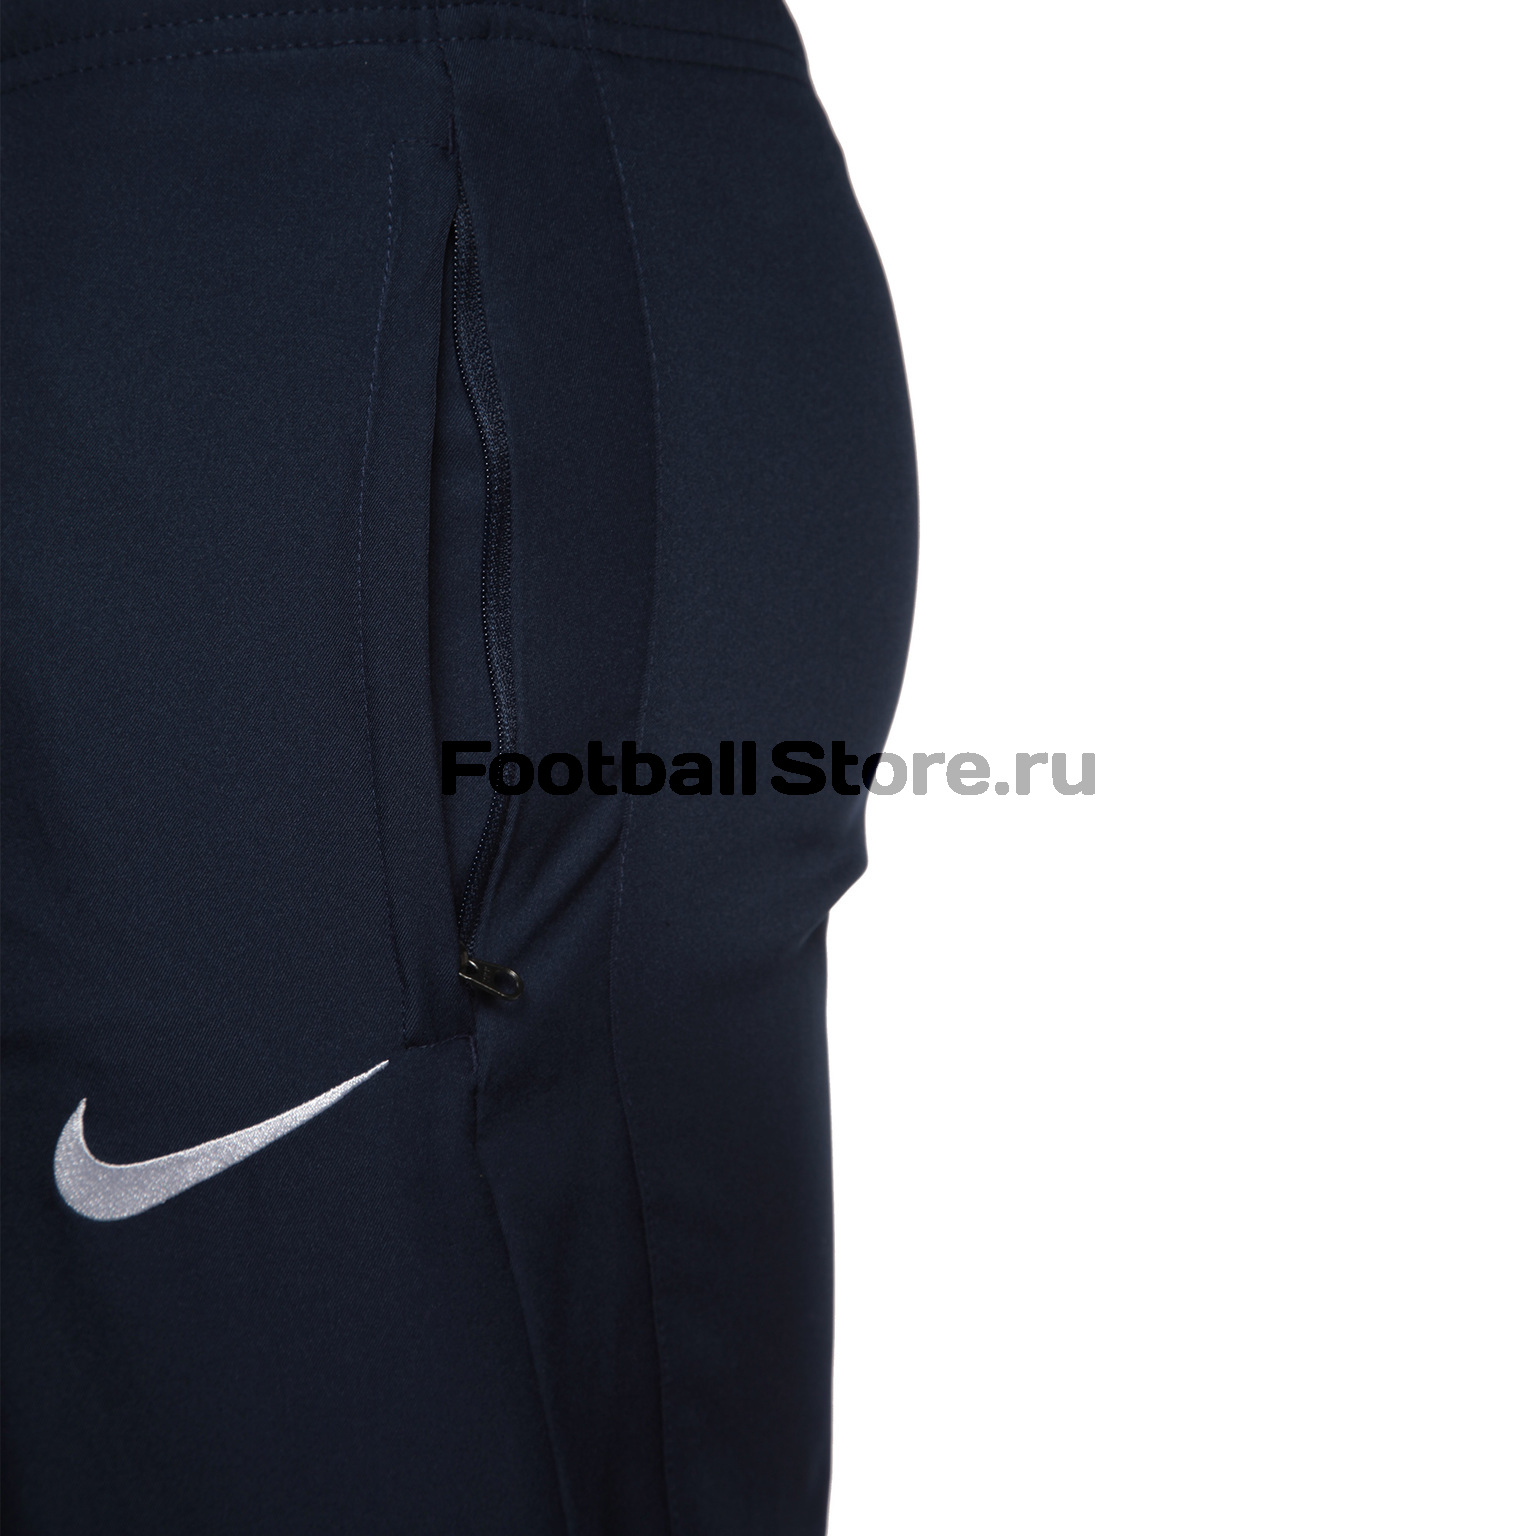 Костюм спортивный Nike Dry Academy18 TRK Suit W 893709-451